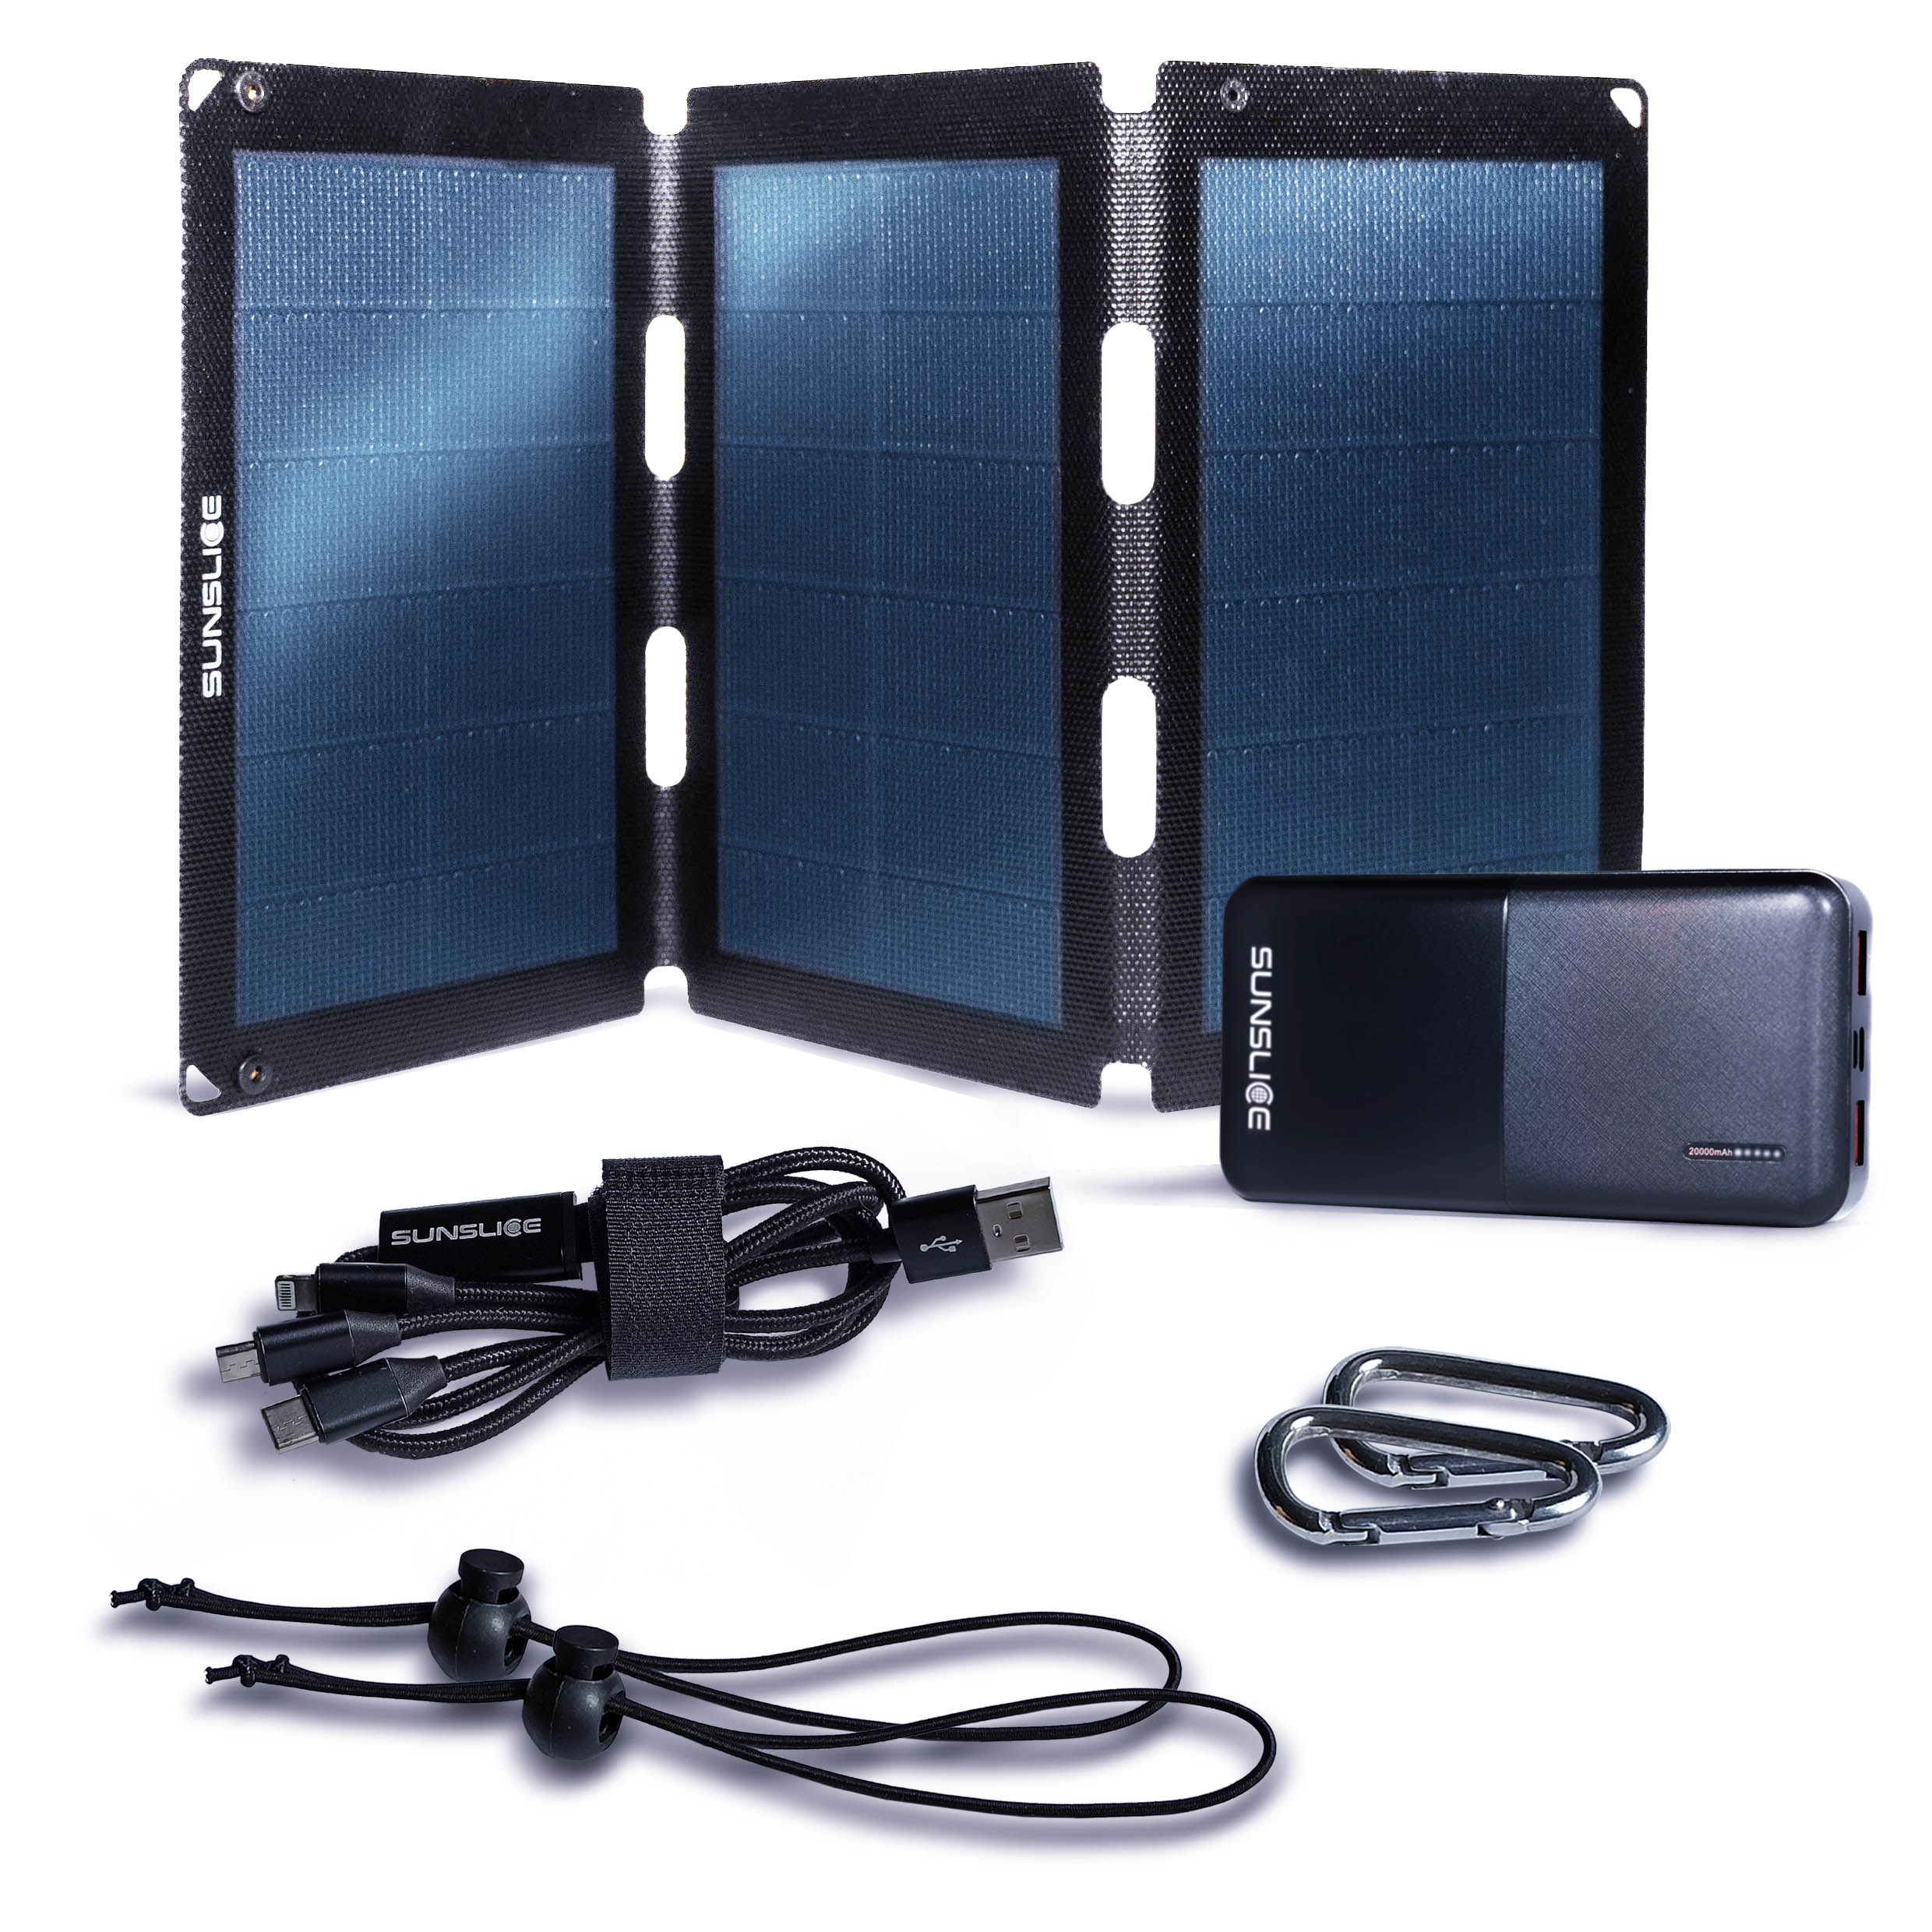 sunslice portable 18 watt solar panel and 20000mAh power bank nomad kit